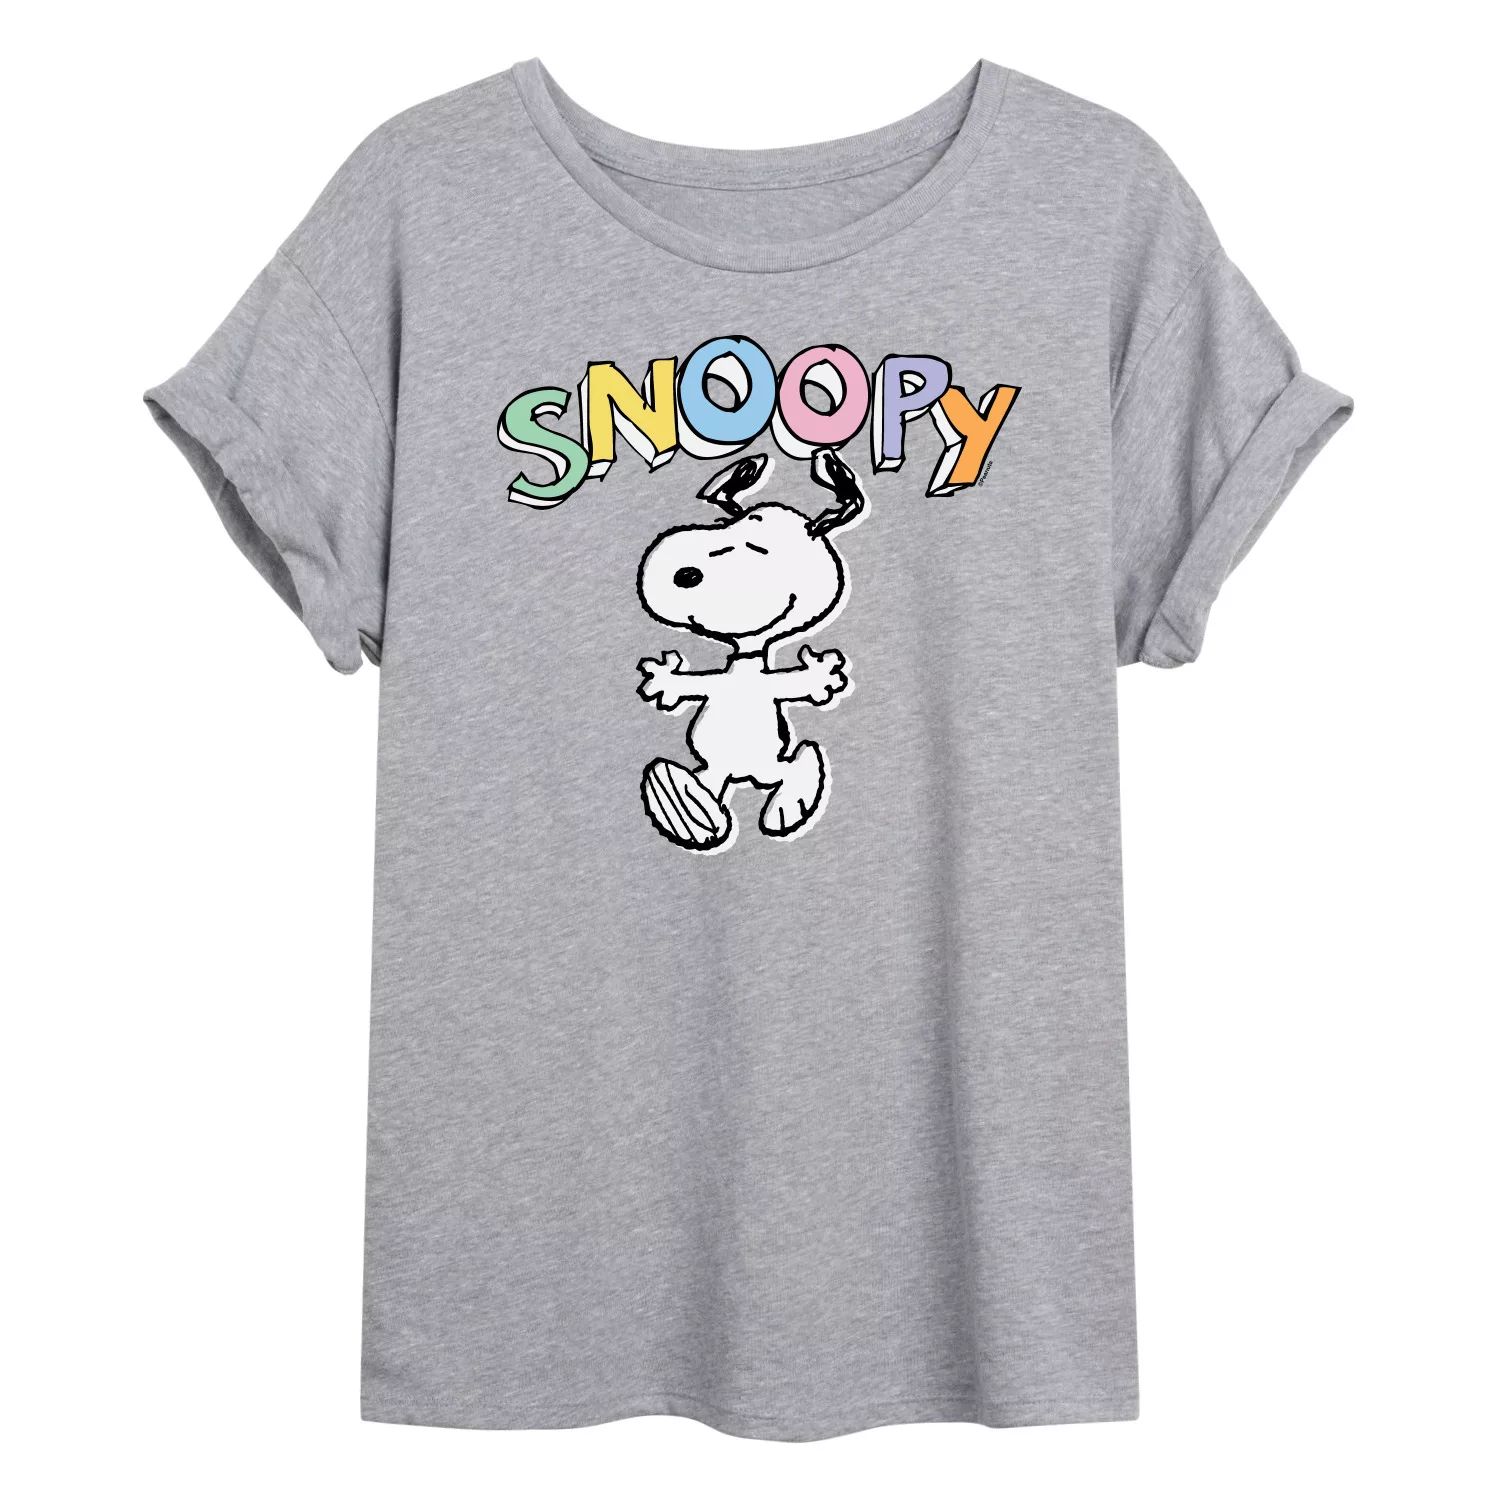 Детская футболка Peanuts Snoopy с струящимся рисунком и рисунком Licensed Character